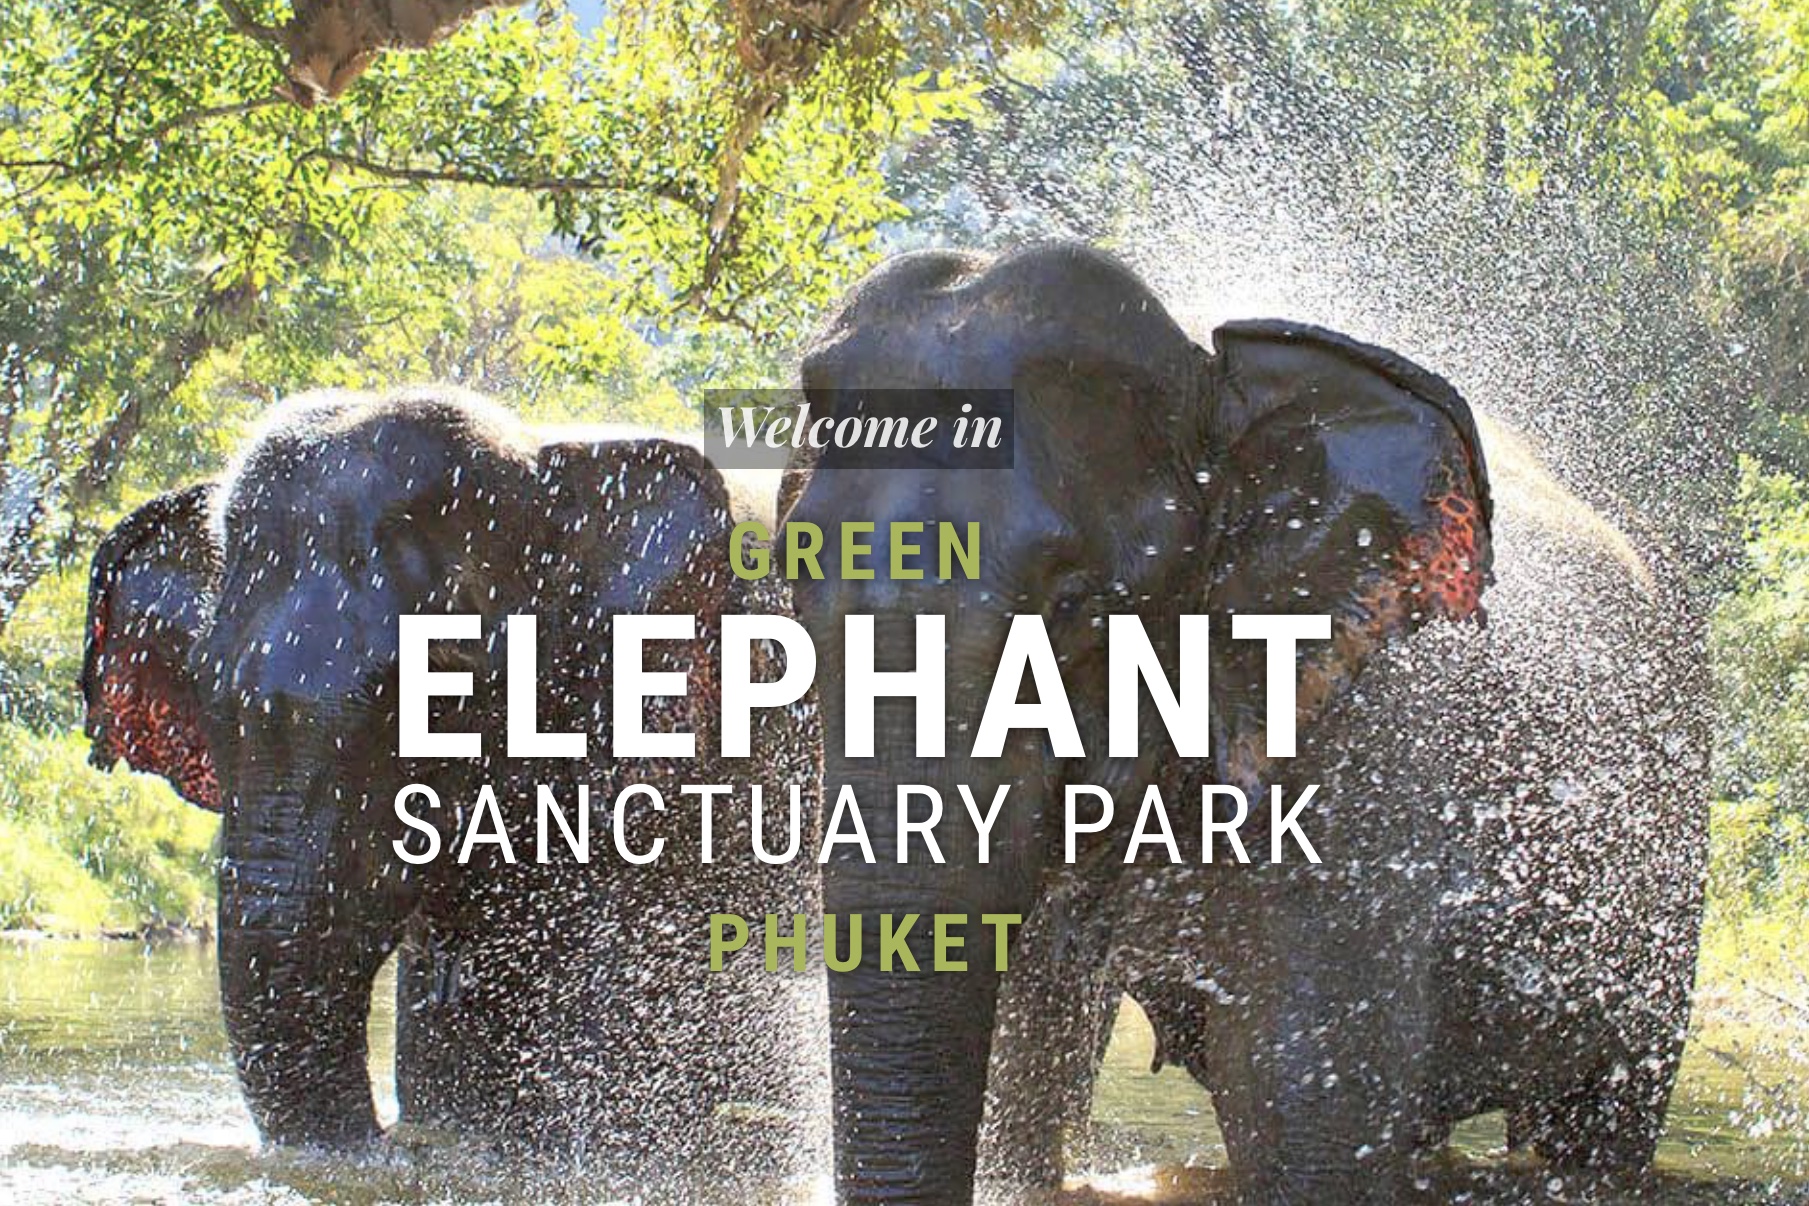 Phuket Elephant Sanctuary. Elefante Beach Phuket. Green Elephant Sanctuary Урс фехра Urs Fehr.